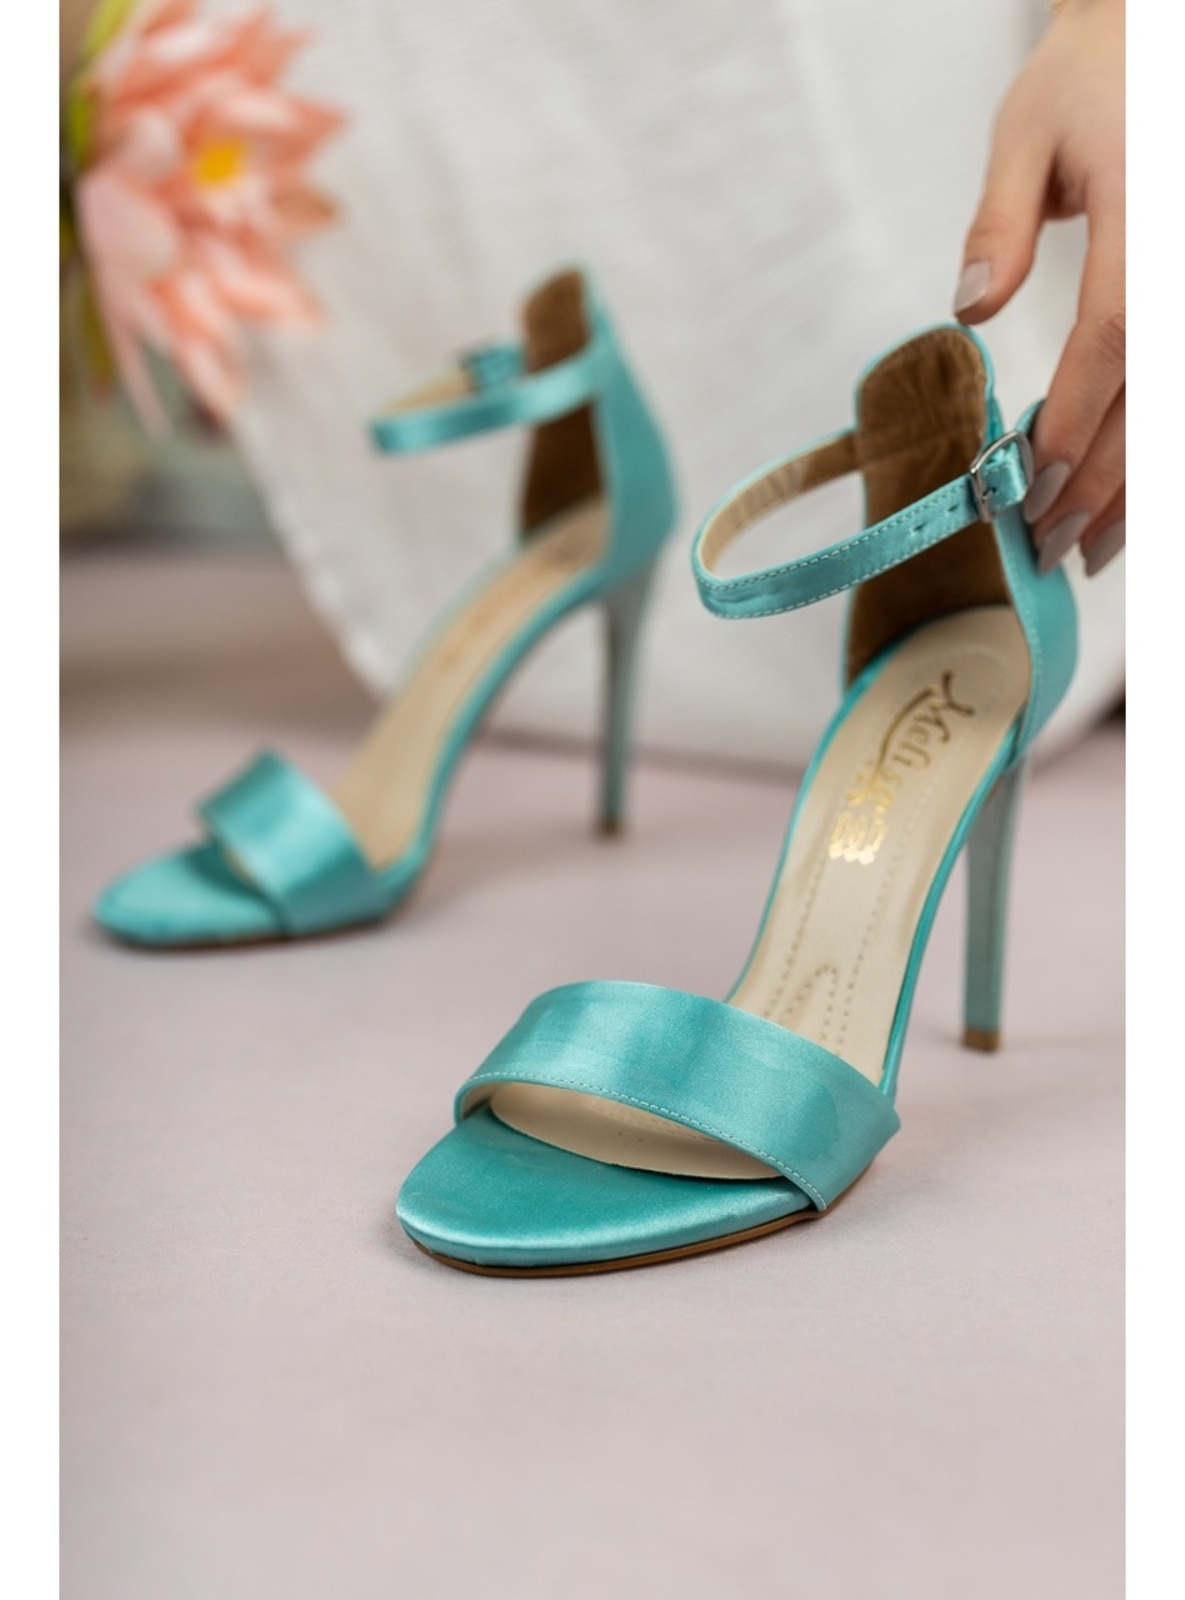 Sam Edelman Pumps Pointed Toe Turquoise Stiletto Snake Skin Shoes Size 6.5  M | eBay